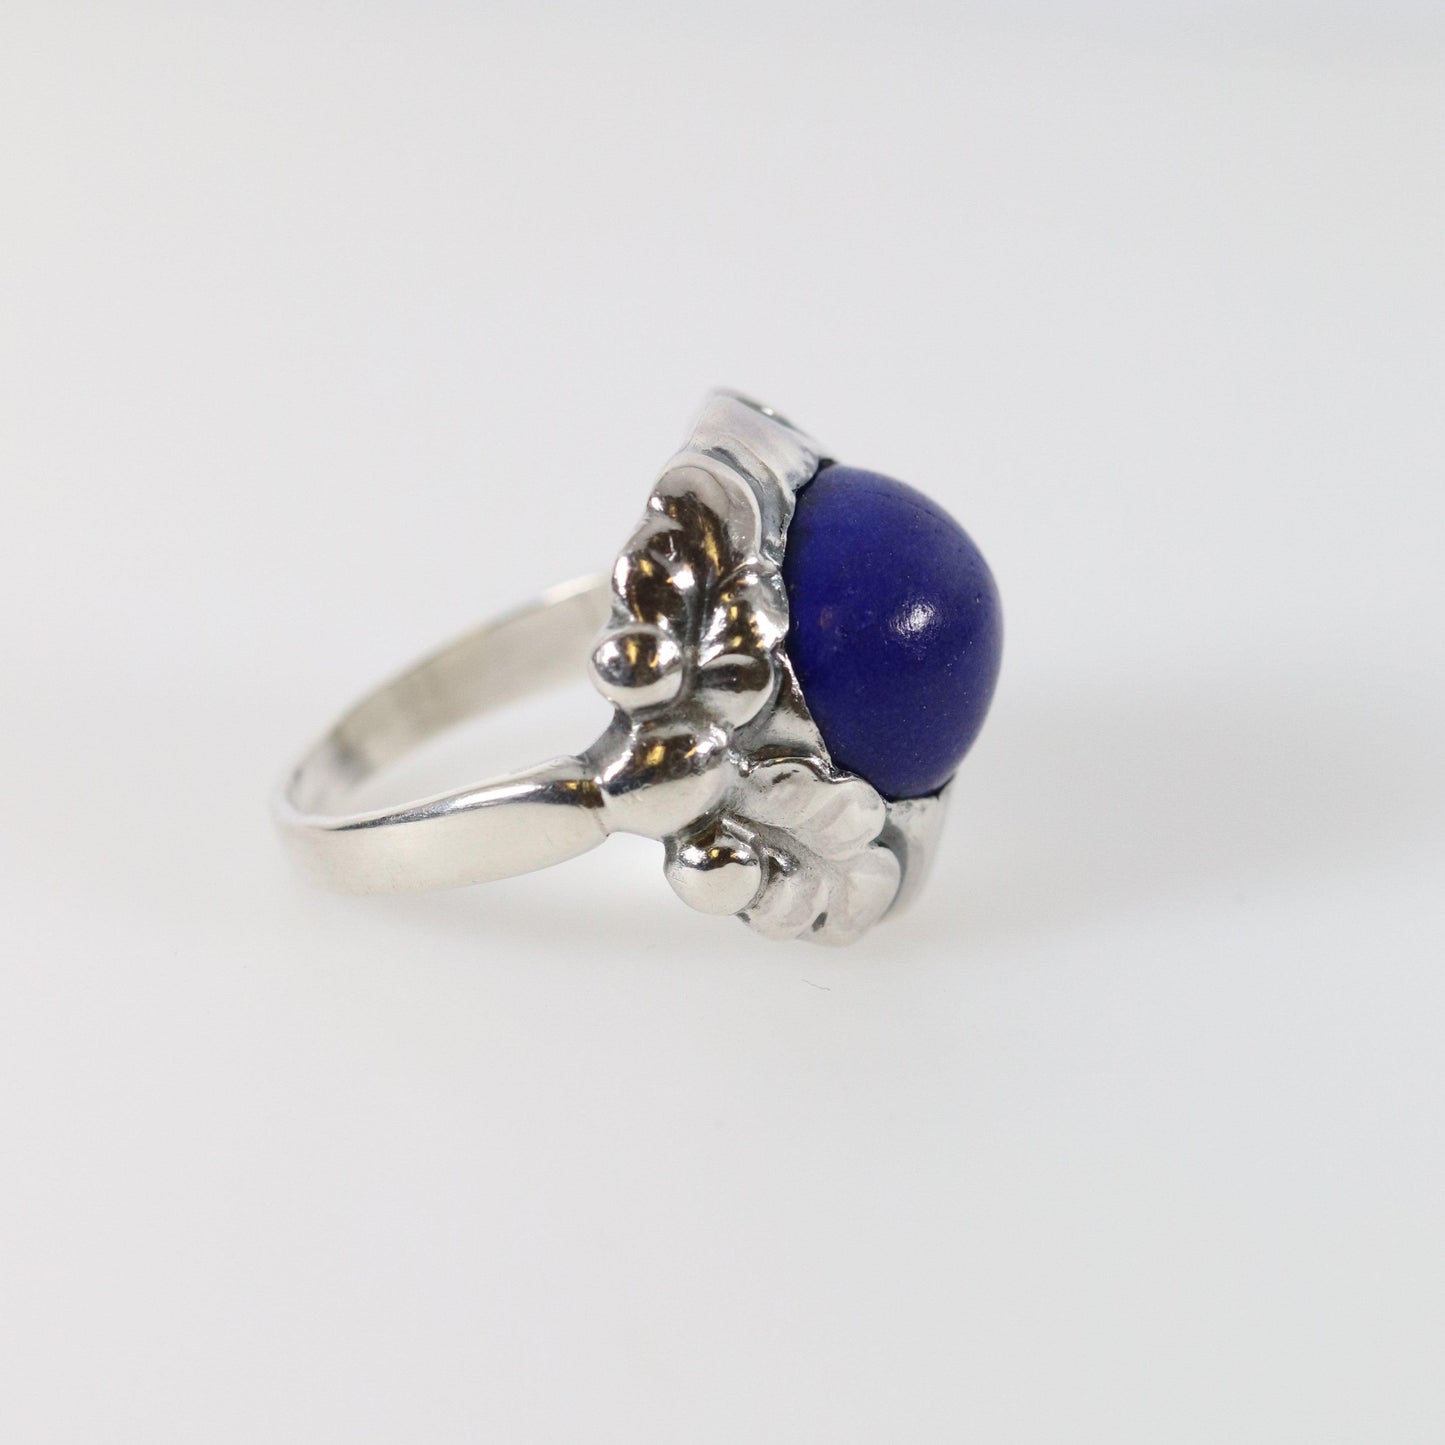 Vintage Georg Jensen Jewelry | Art Nouveau Lapis Lazuli Ring 11A - Carmel Fine Silver Jewelry